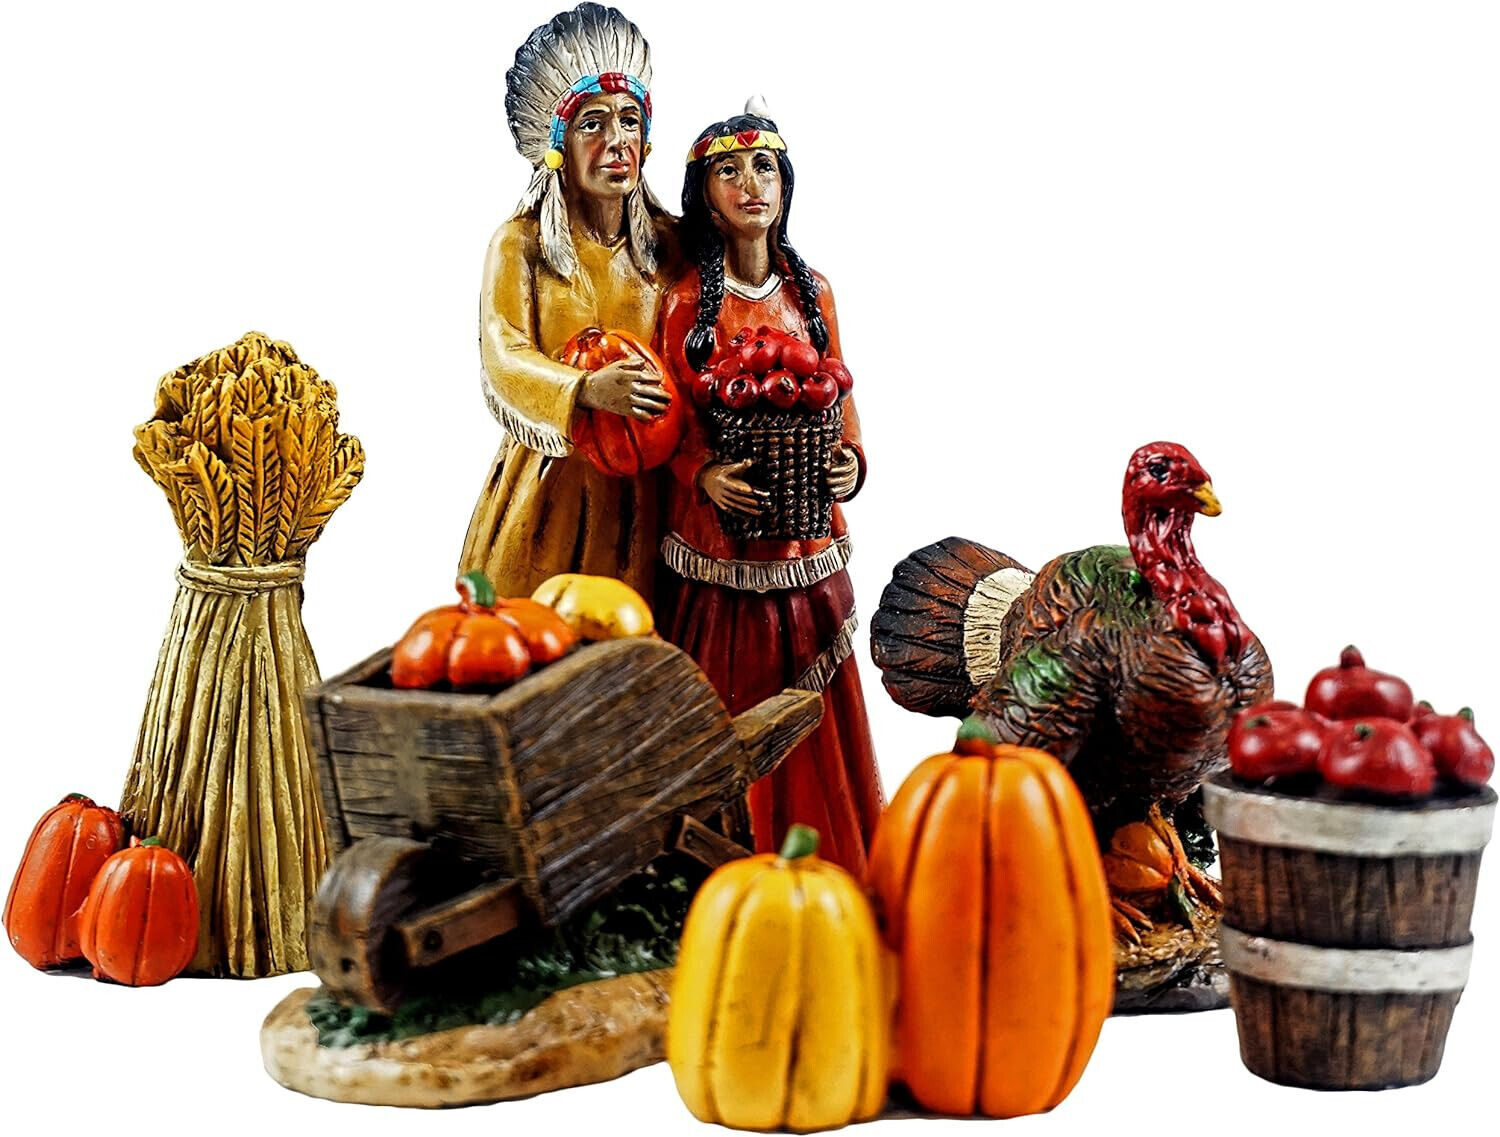 Set of 6 Mini Thankgiving Figurines, Freestanding Indian Village Figurines